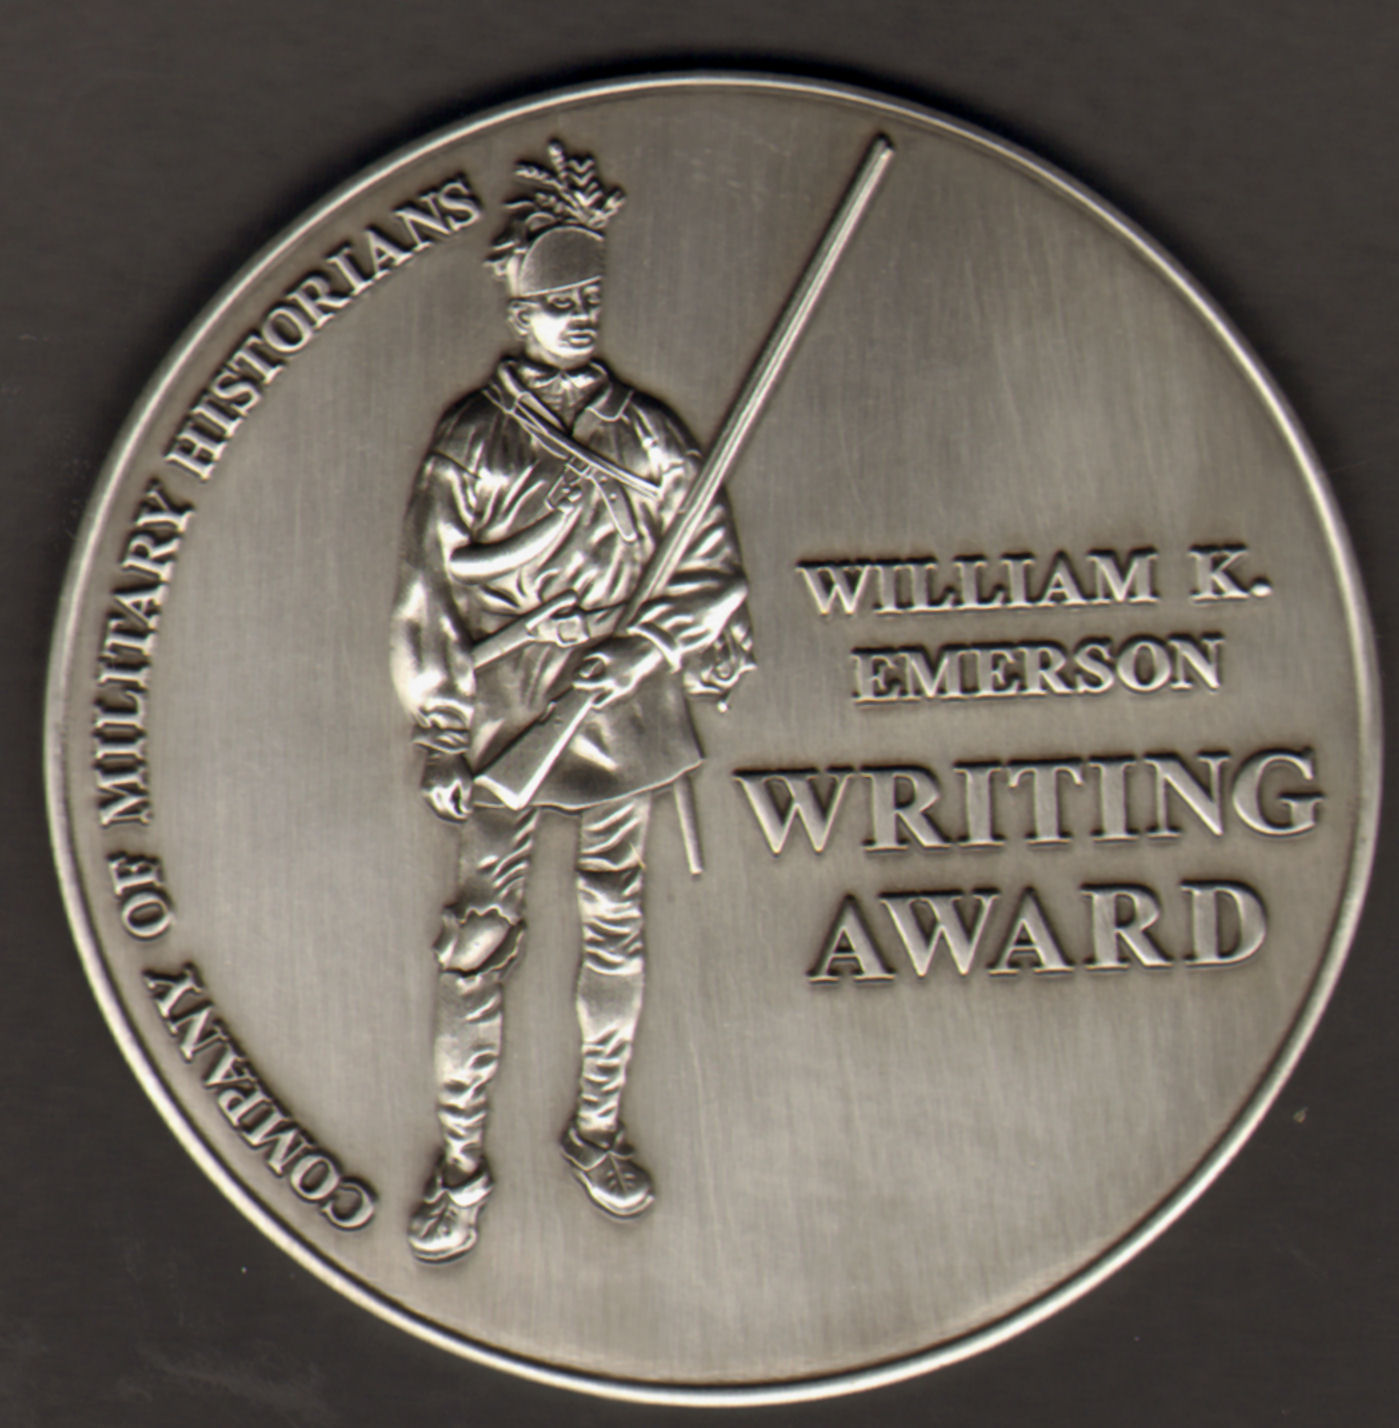 Emerson Award Medal